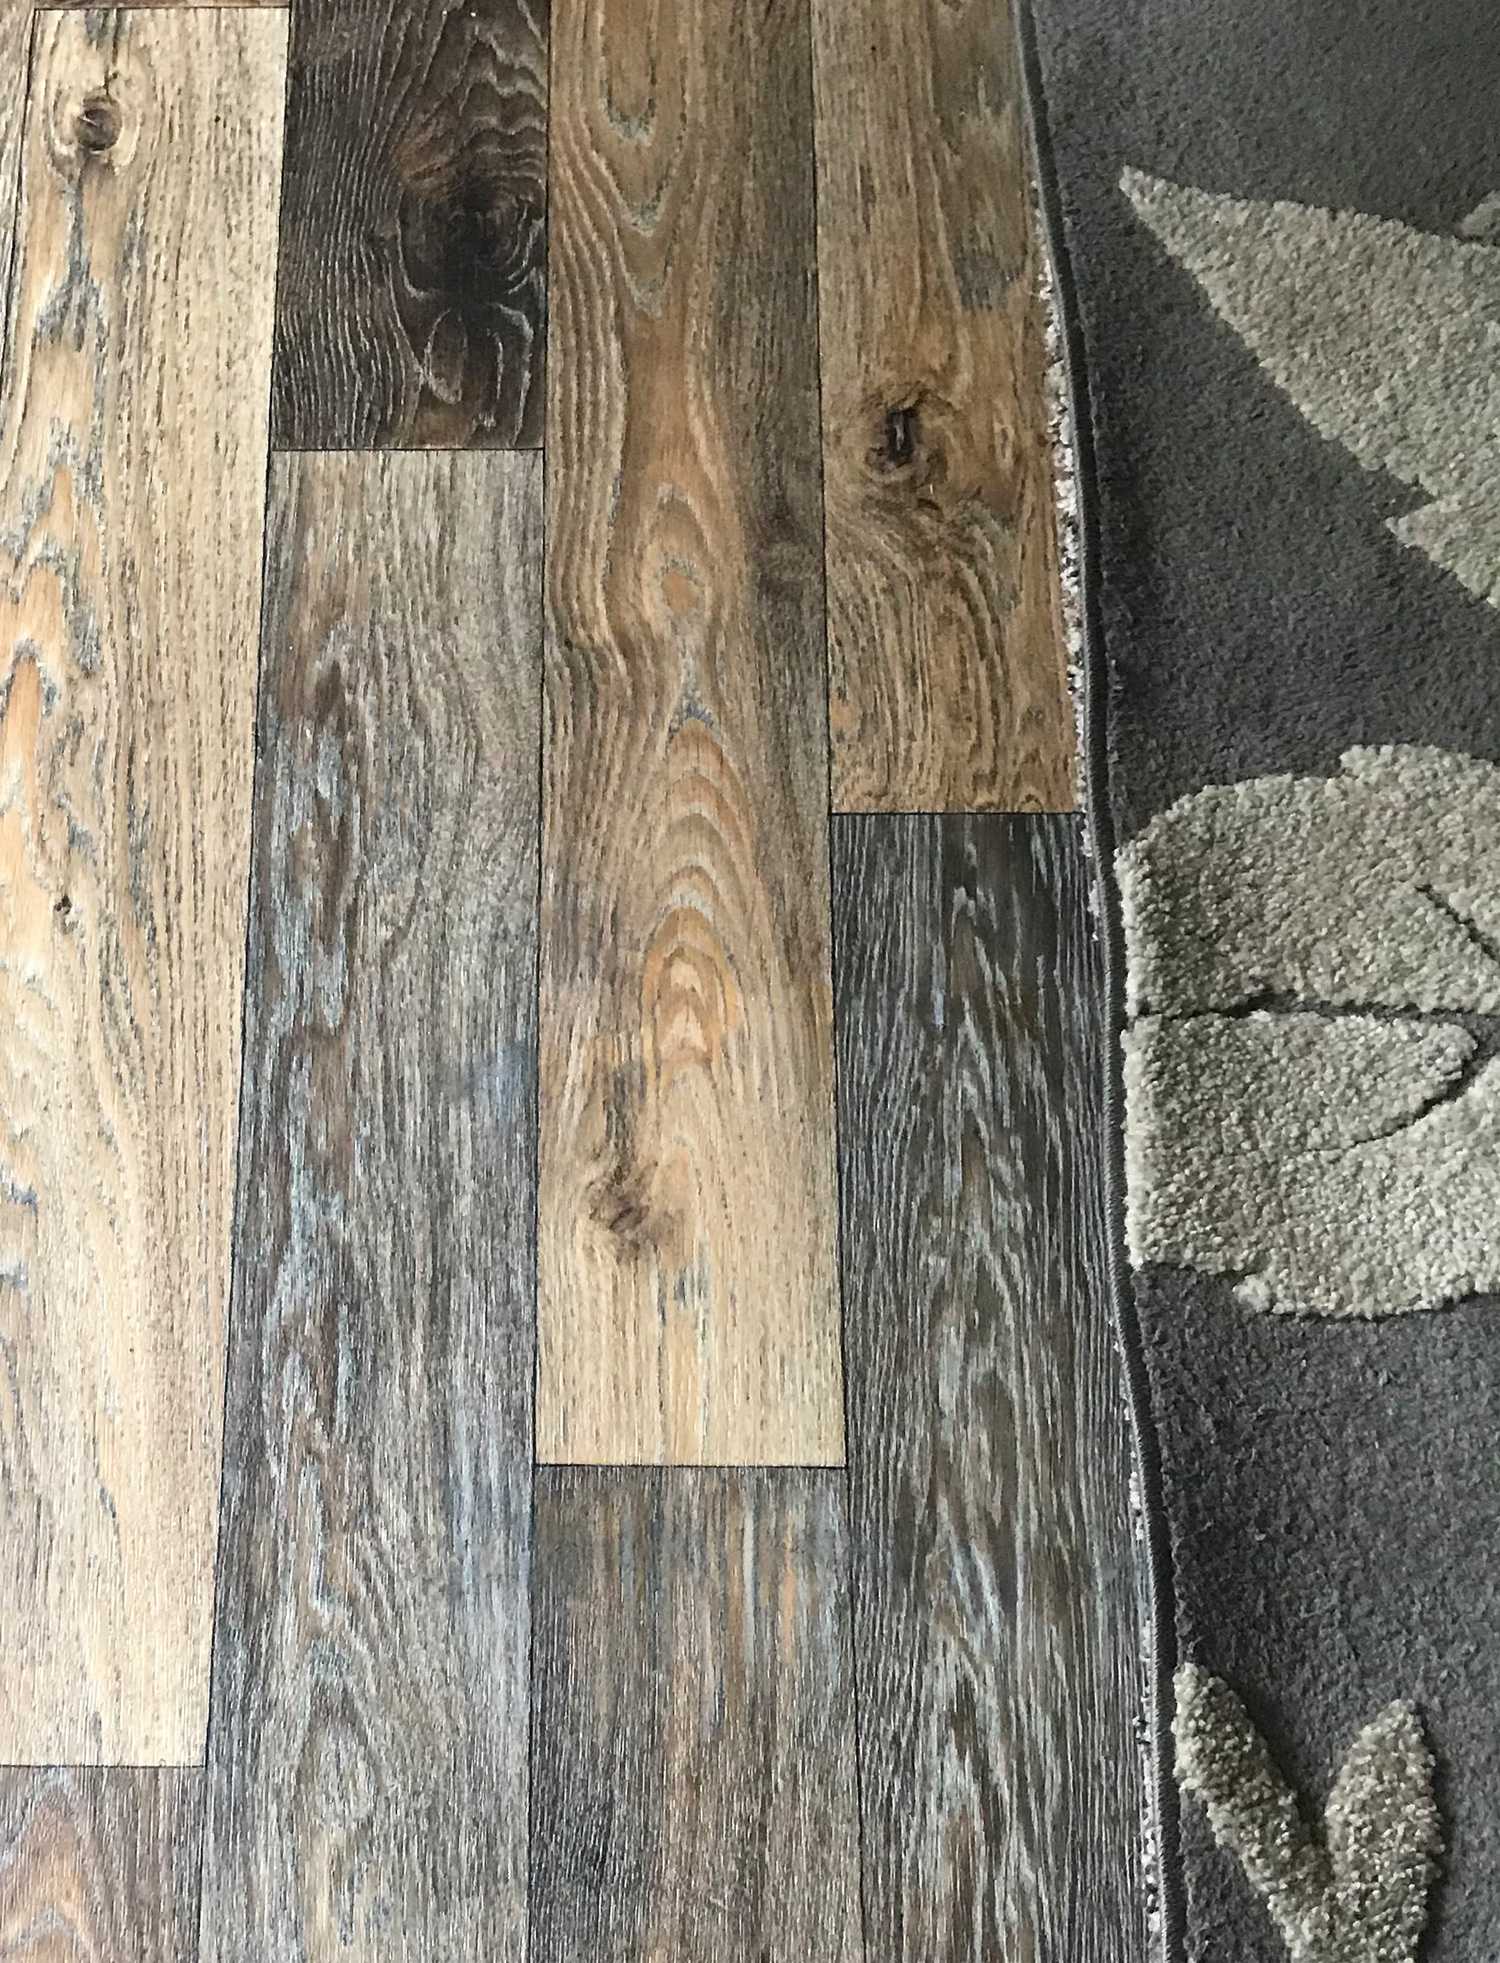 Healed and restored rv flooring